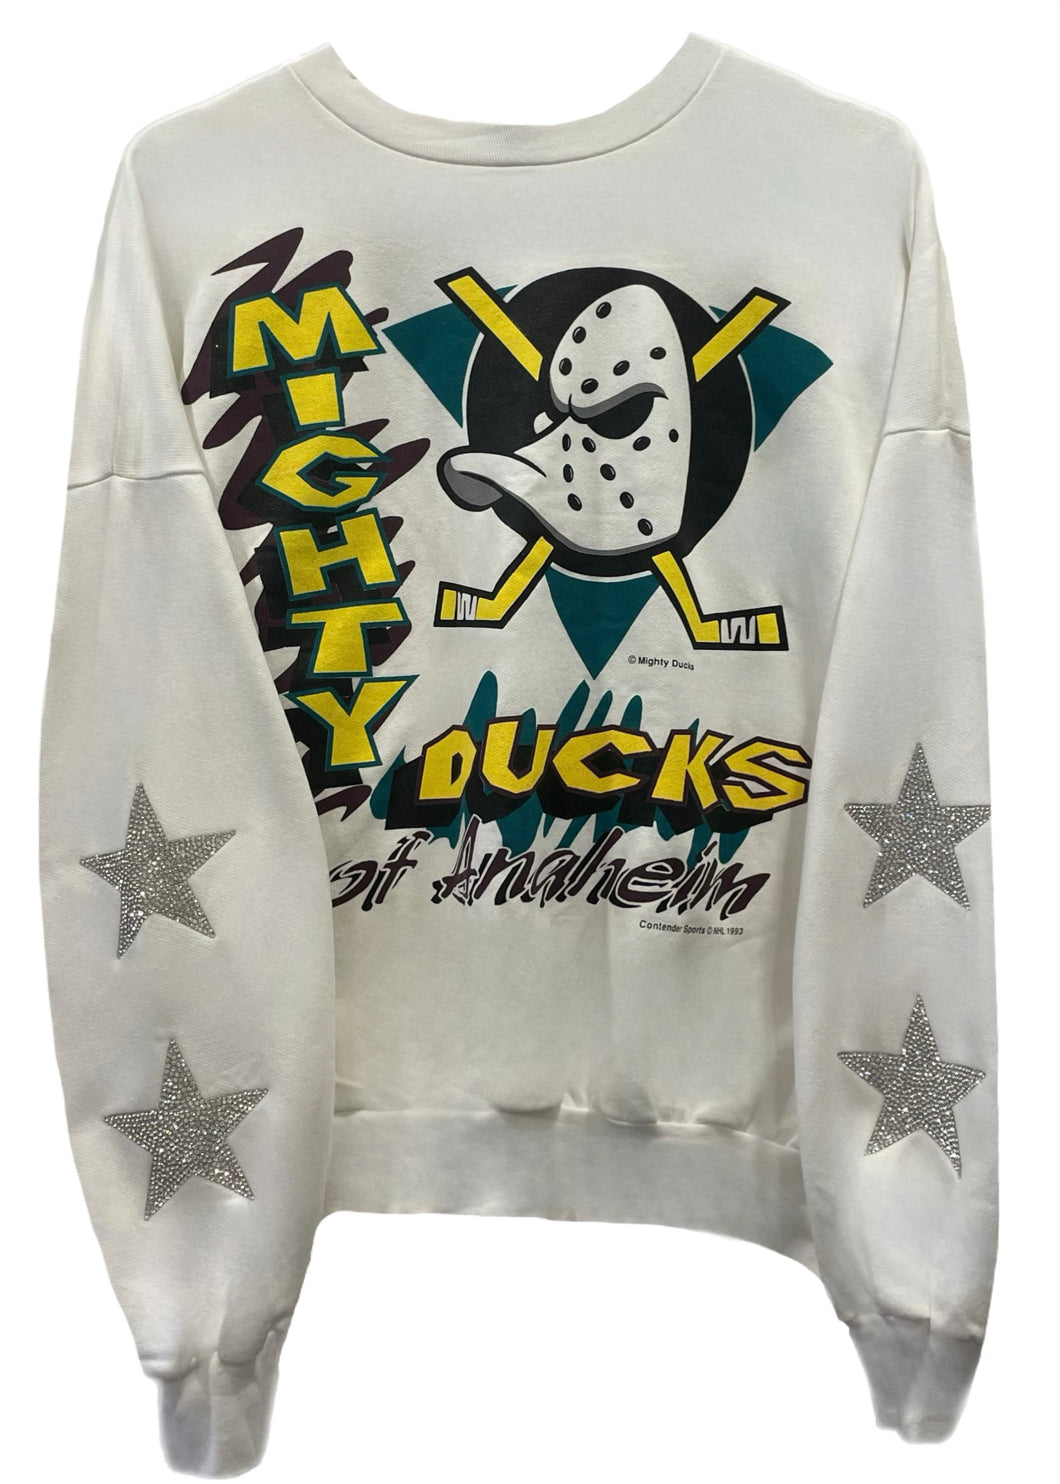 Anaheim Ducks, NHL One of a KIND Vintage “Mighty Ducks” Super Rare Find Sweatshirt with Crystal Star Design - Size: M/L